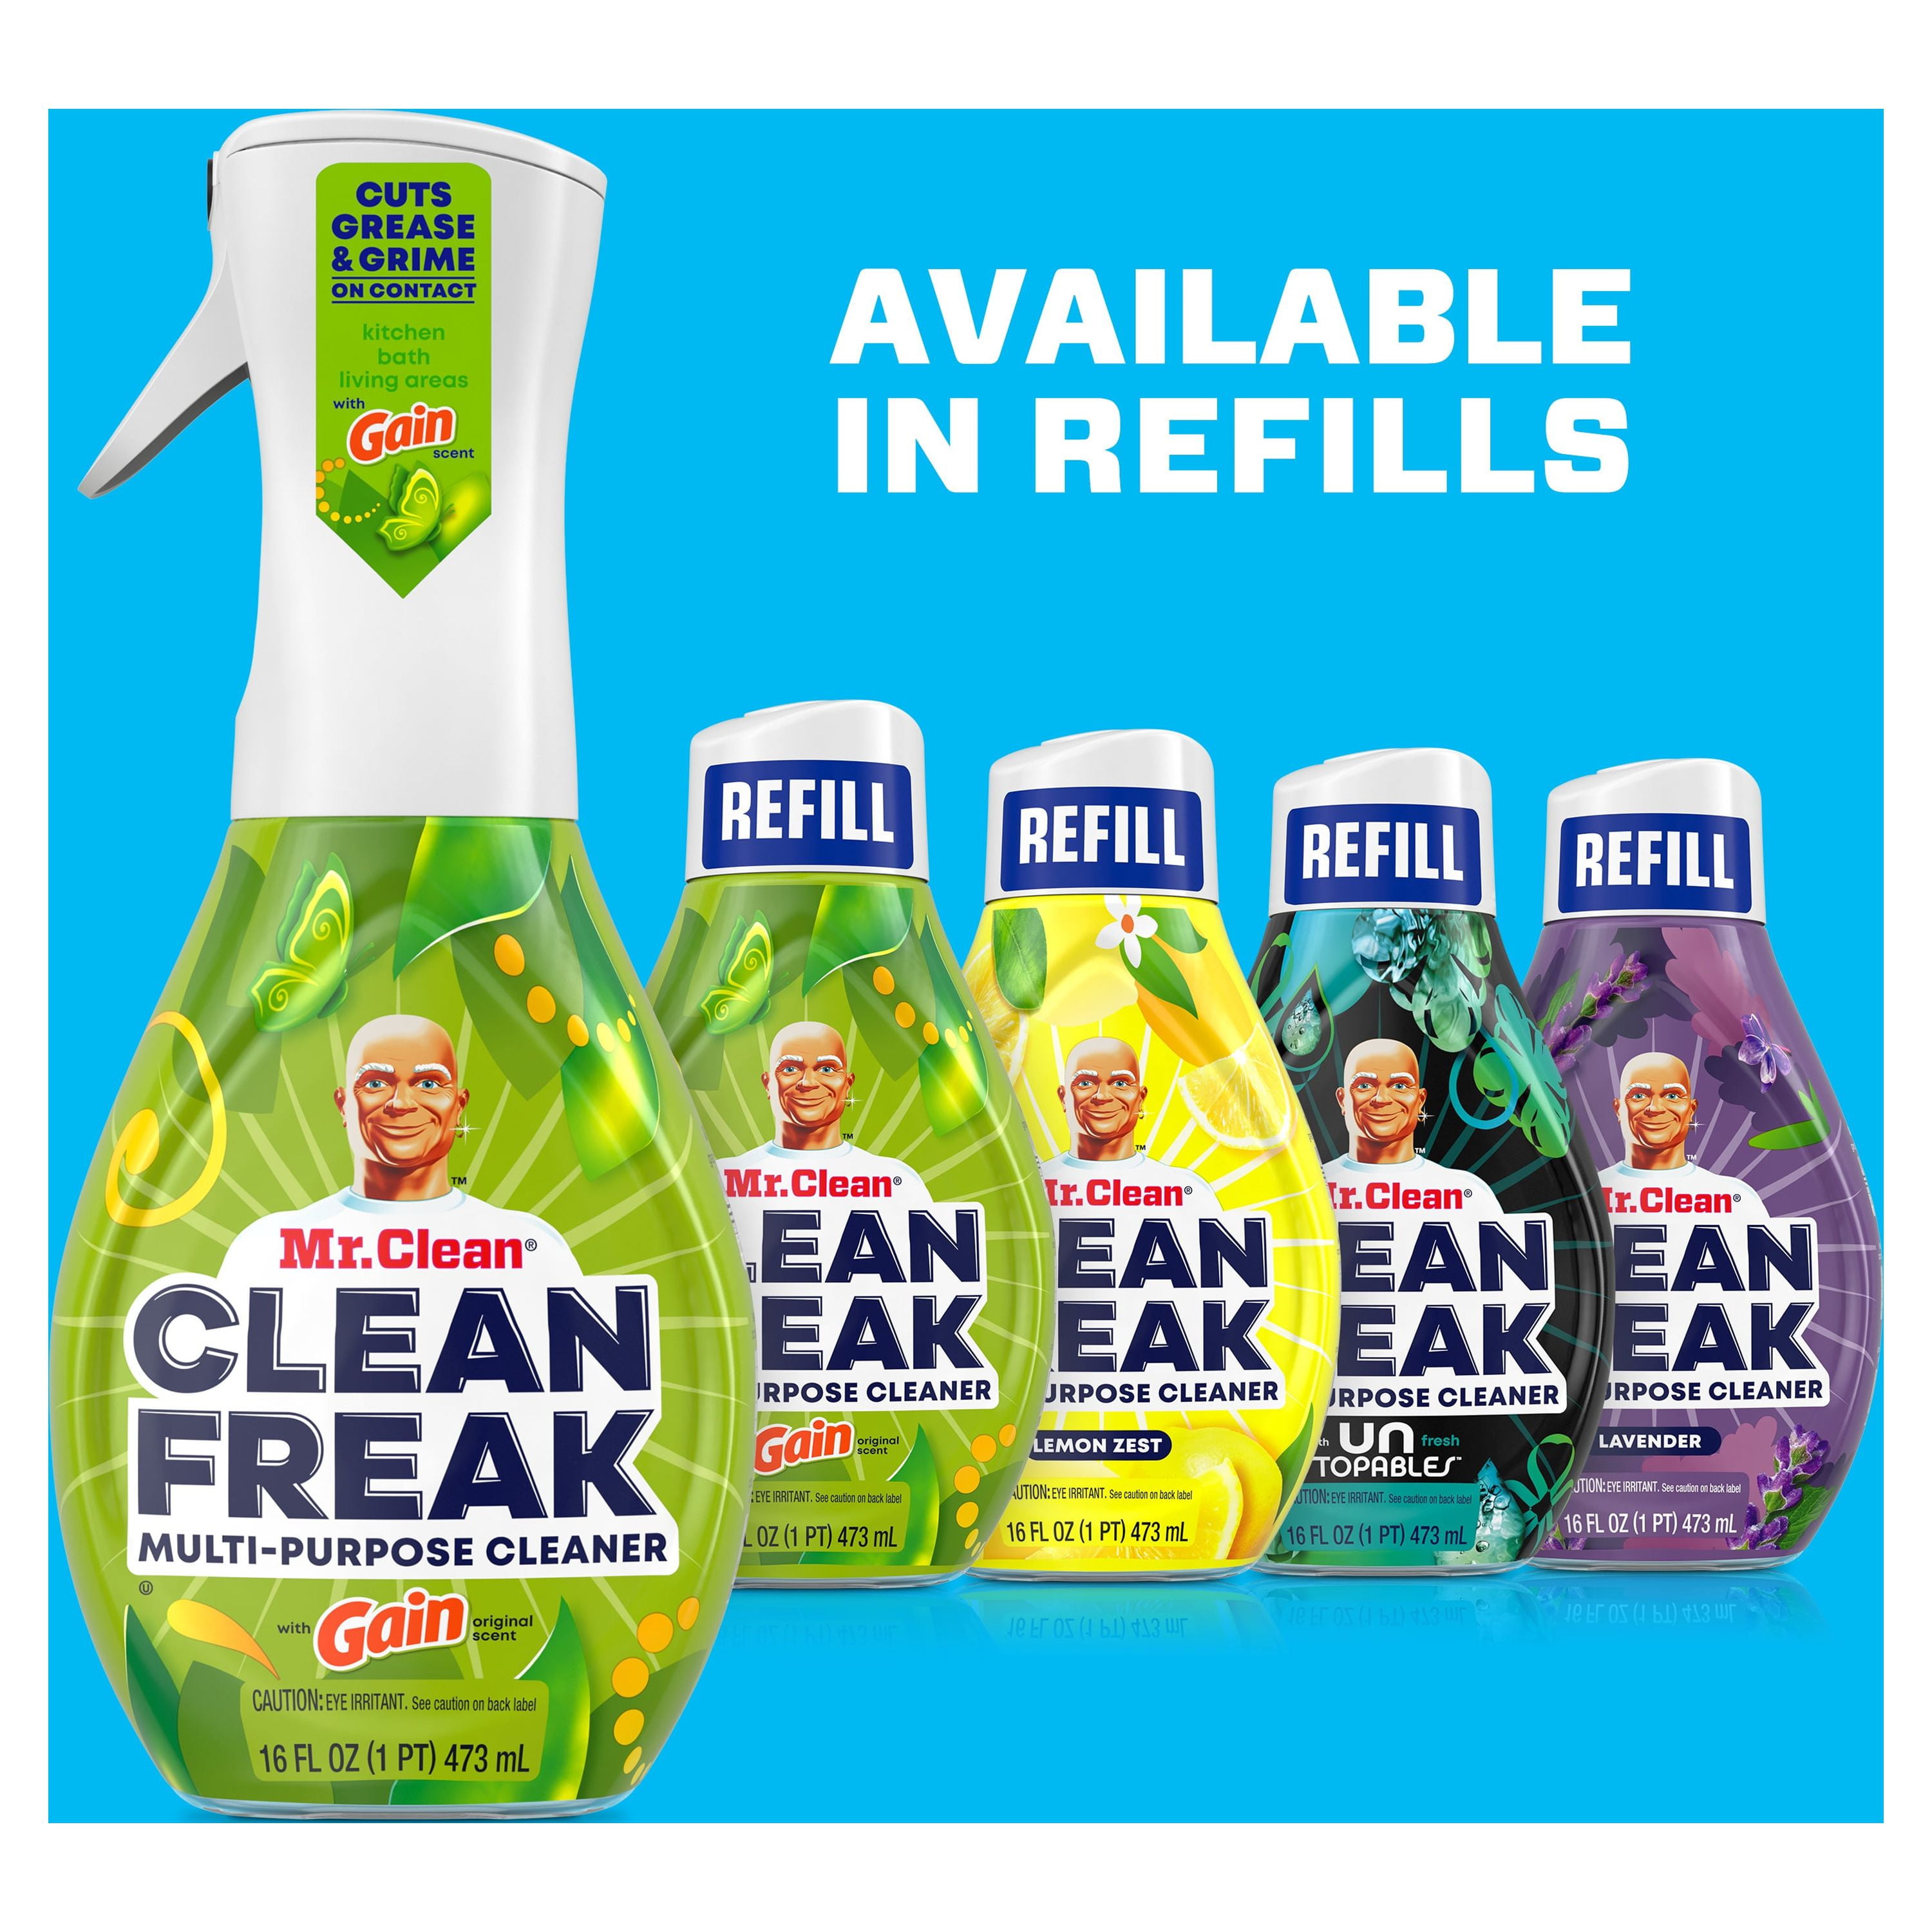 Mr. Clean Clean Freak Deep Cleaning Mist Cleaner Refill Original